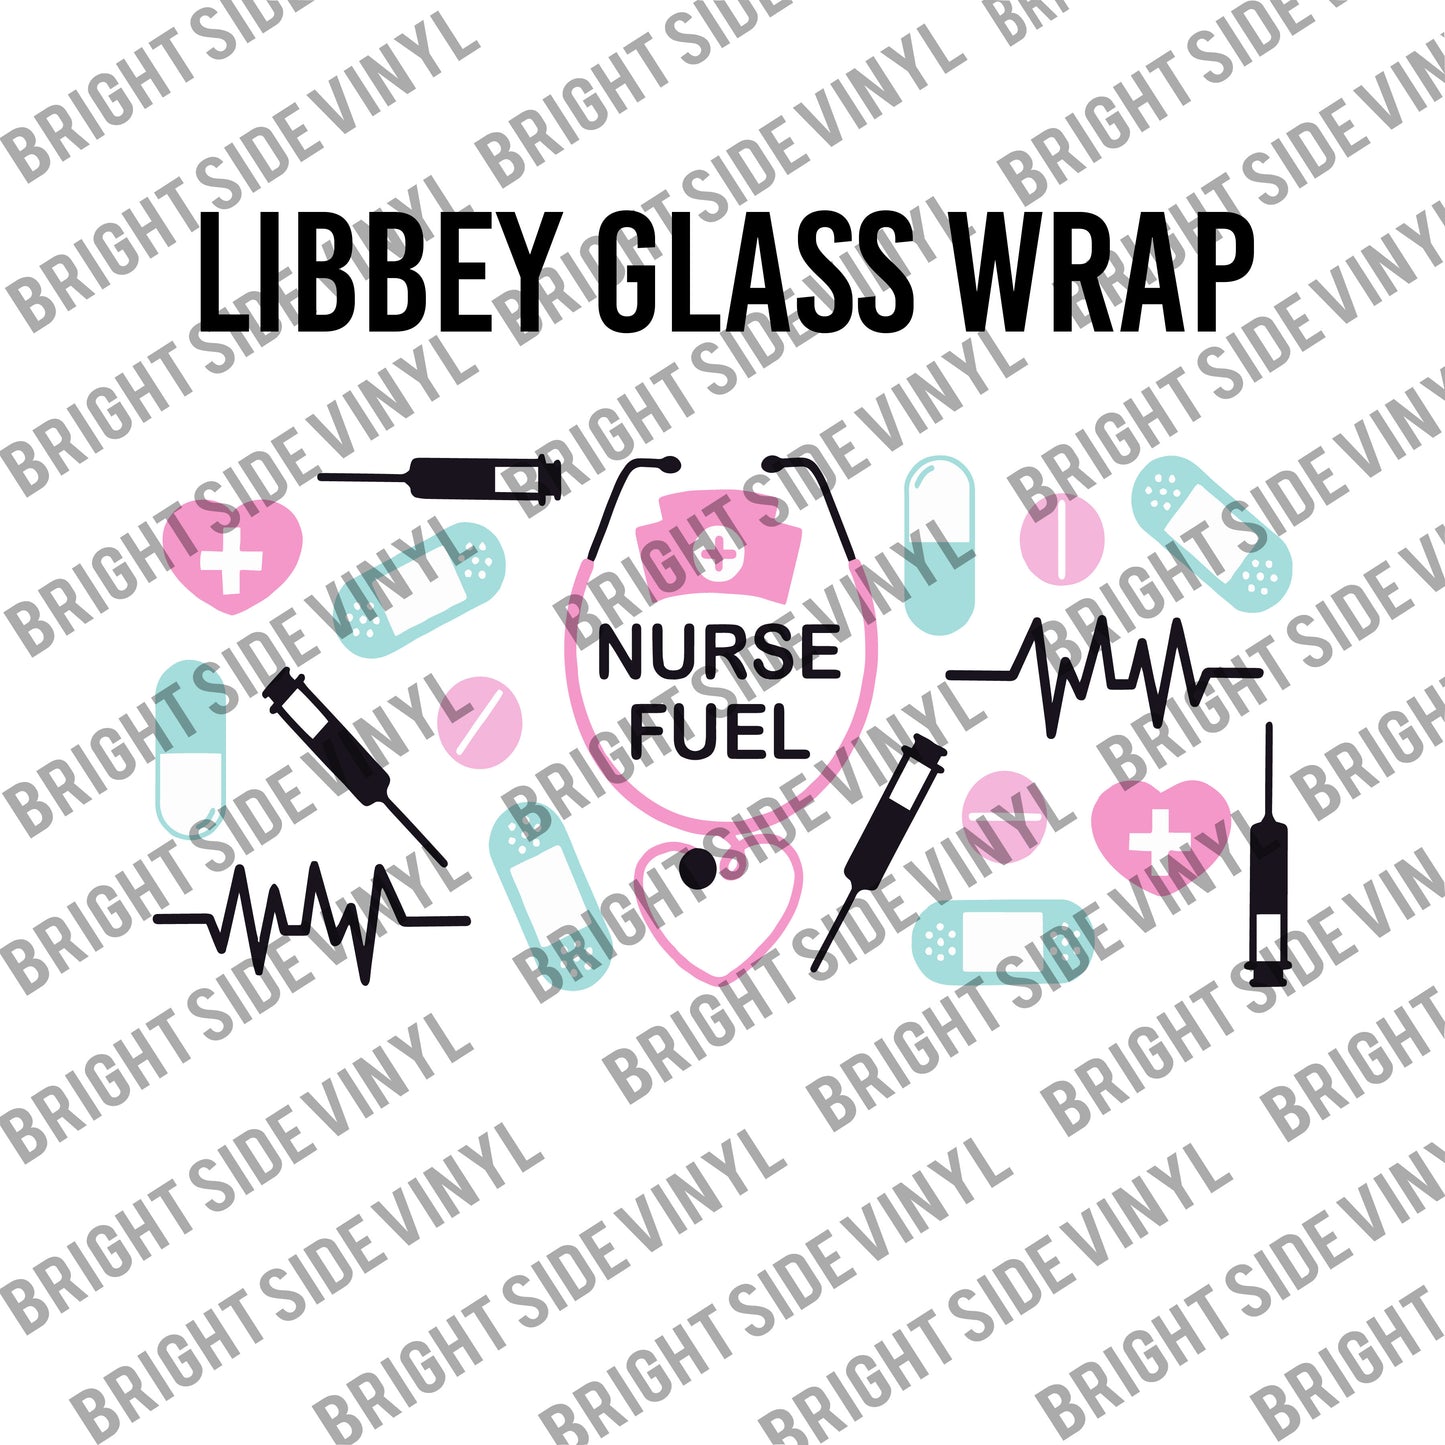 Nurse Fuel (Libbey Glass Wrap)